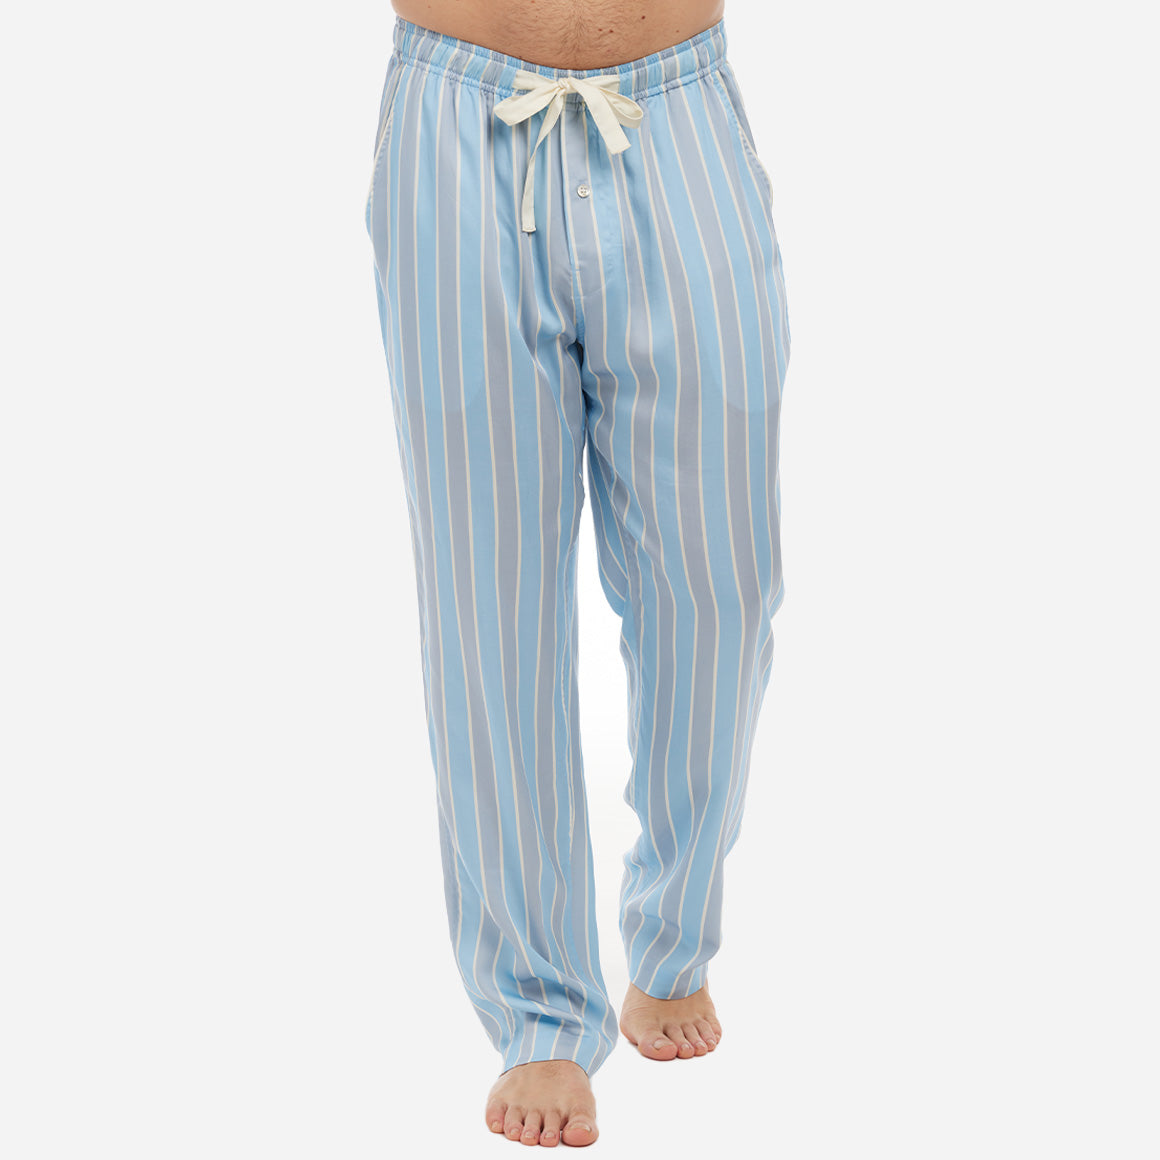 Men's 2 Jersey, Elastic Waistband w. Pockets, Button Fly, Pajama Sleep Pants